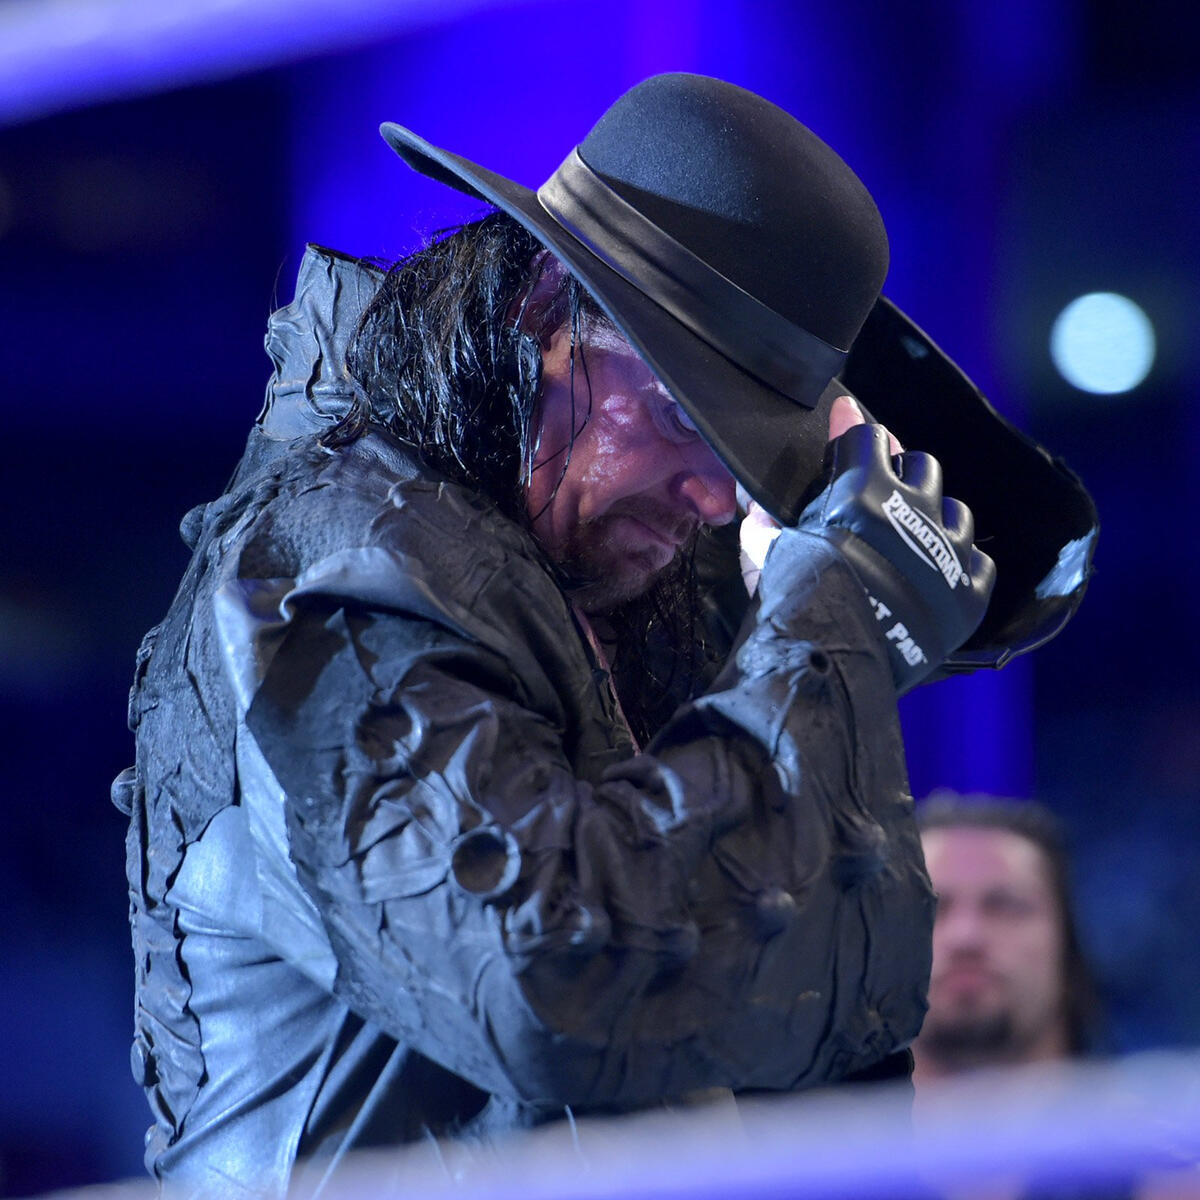 Roman Reigns Vs The Undertaker Wwe